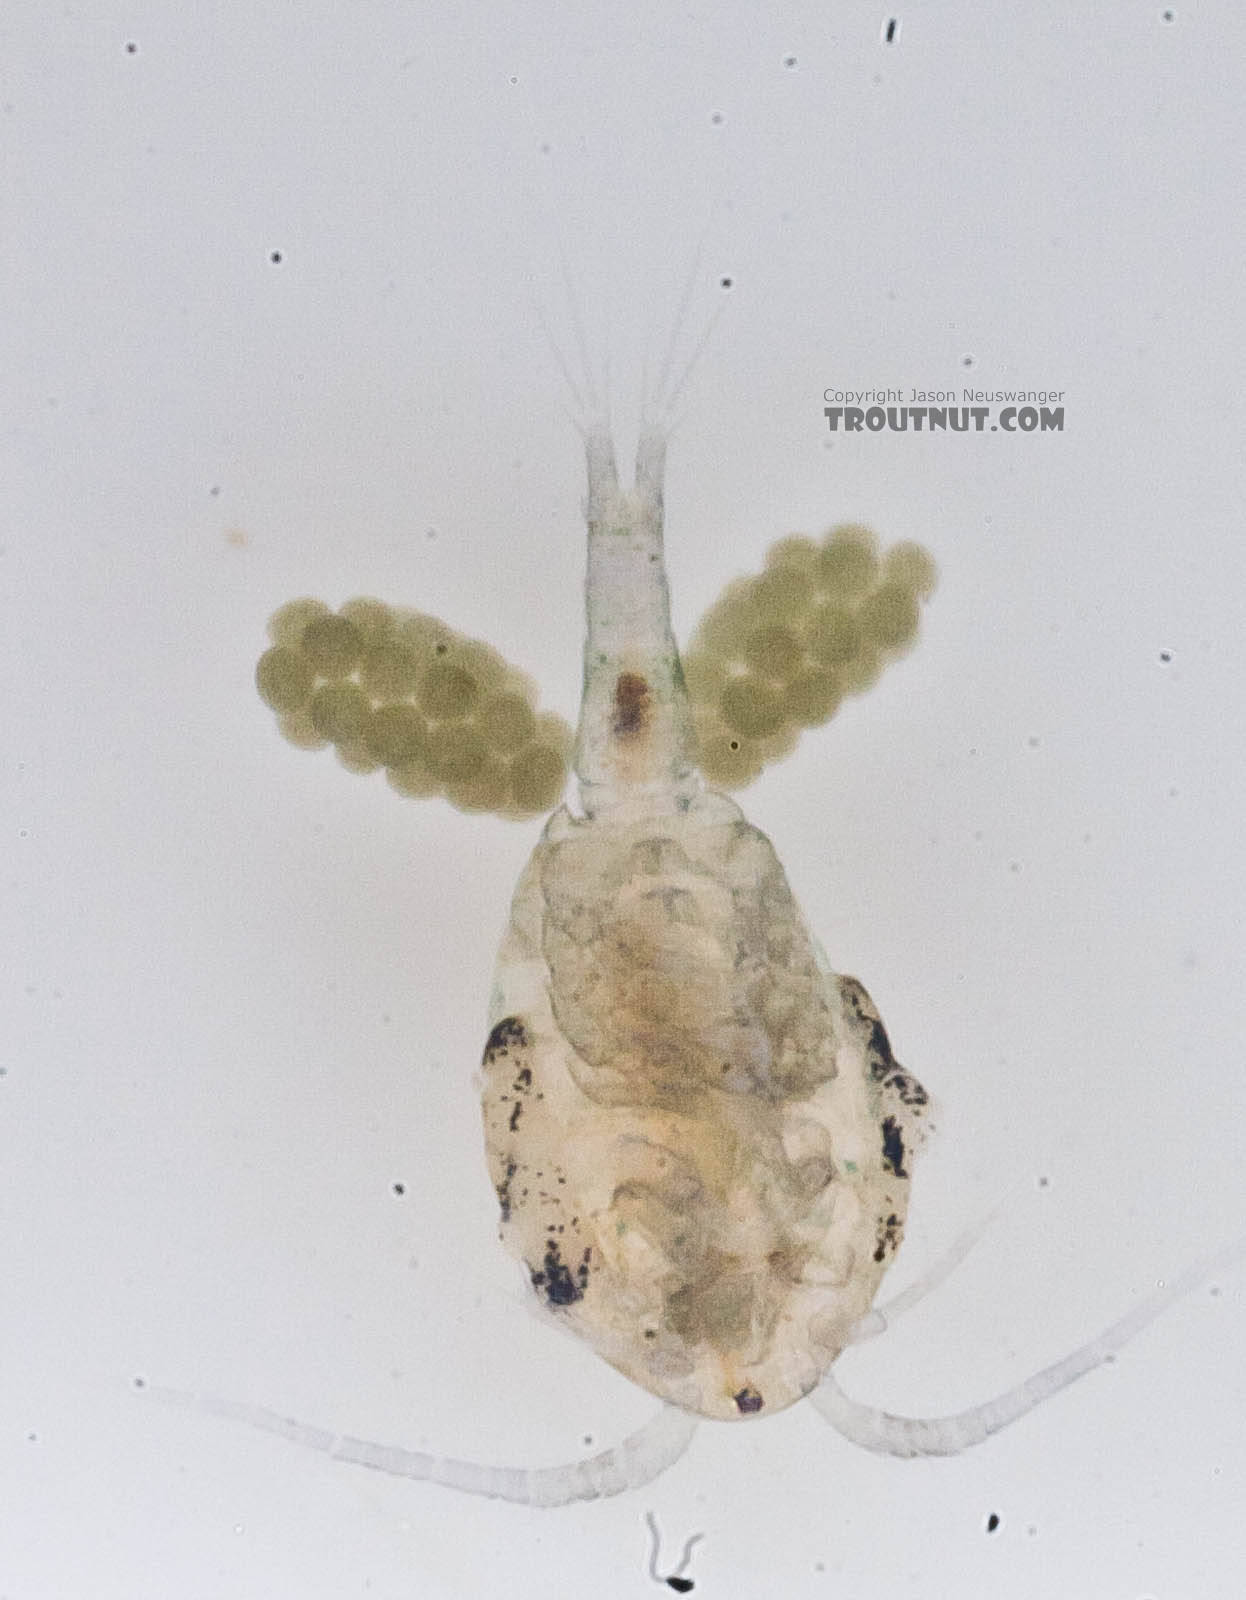 Female Copepoda (Copepods) Copepod Adult from the Chena River in Alaska